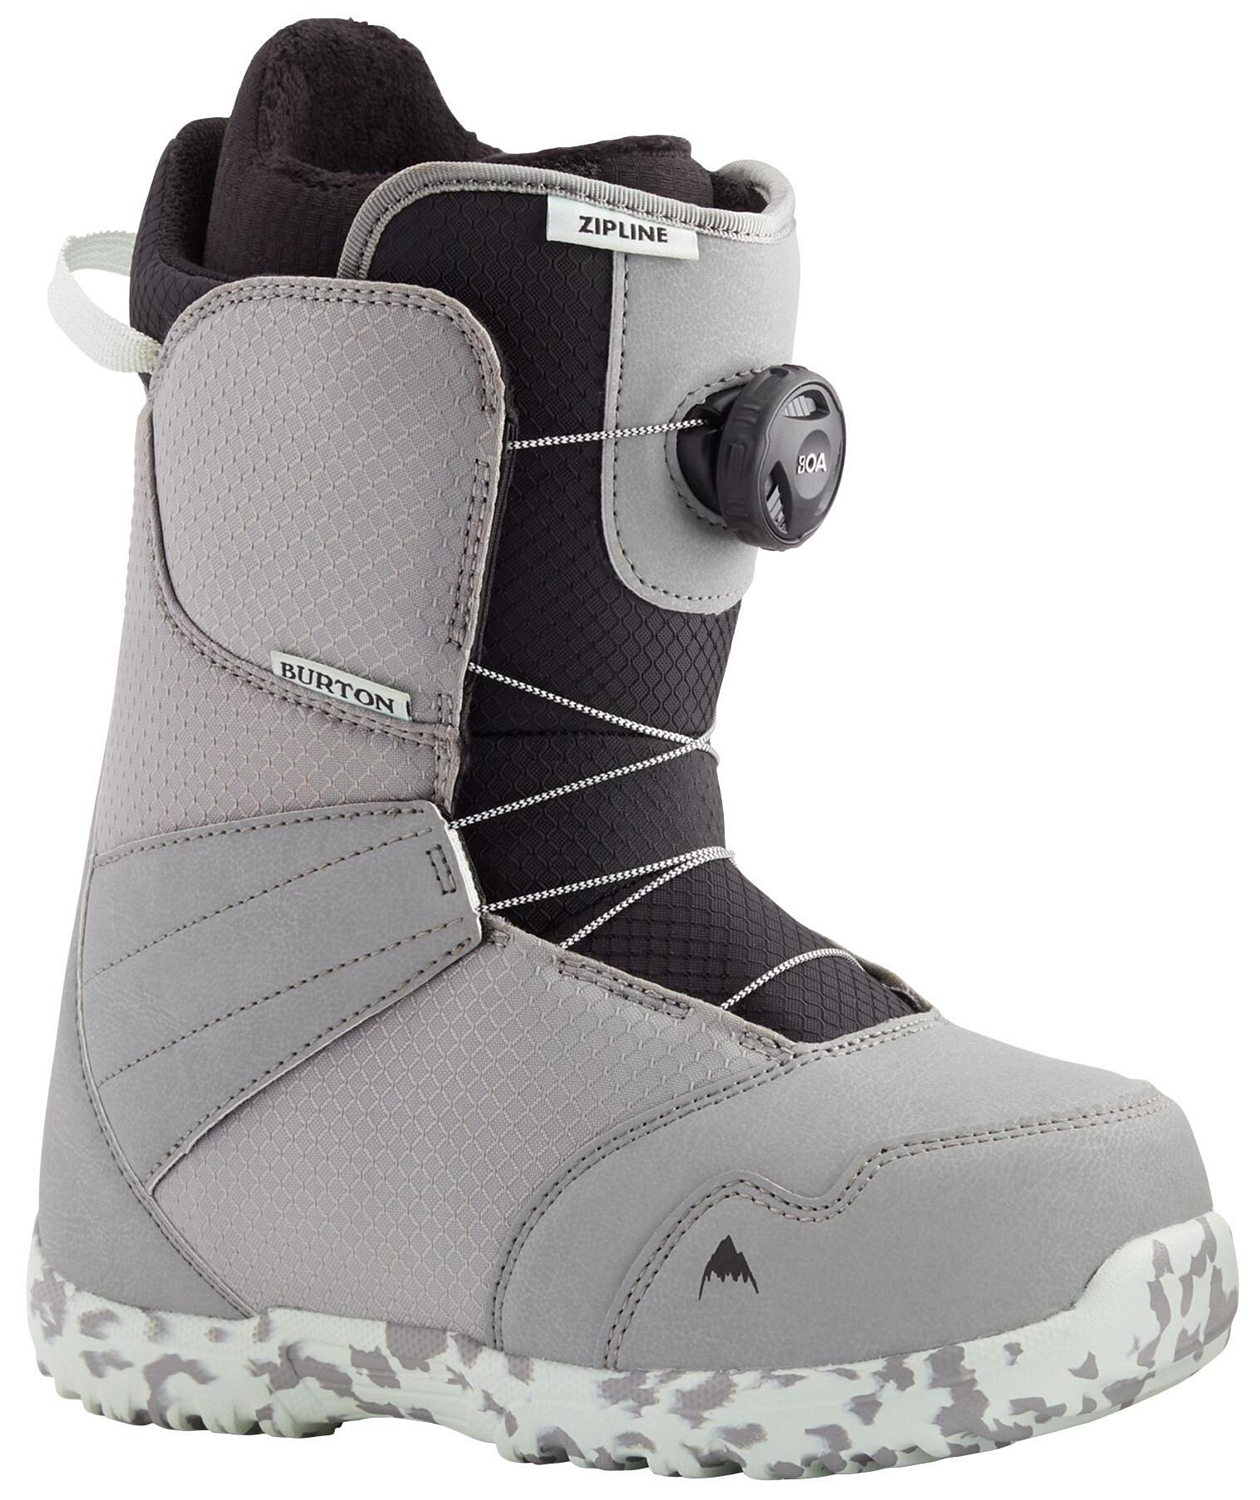 Ботинки для сноуборда BURTON 2020-21 Zipline Boa Gray/Neo-mint